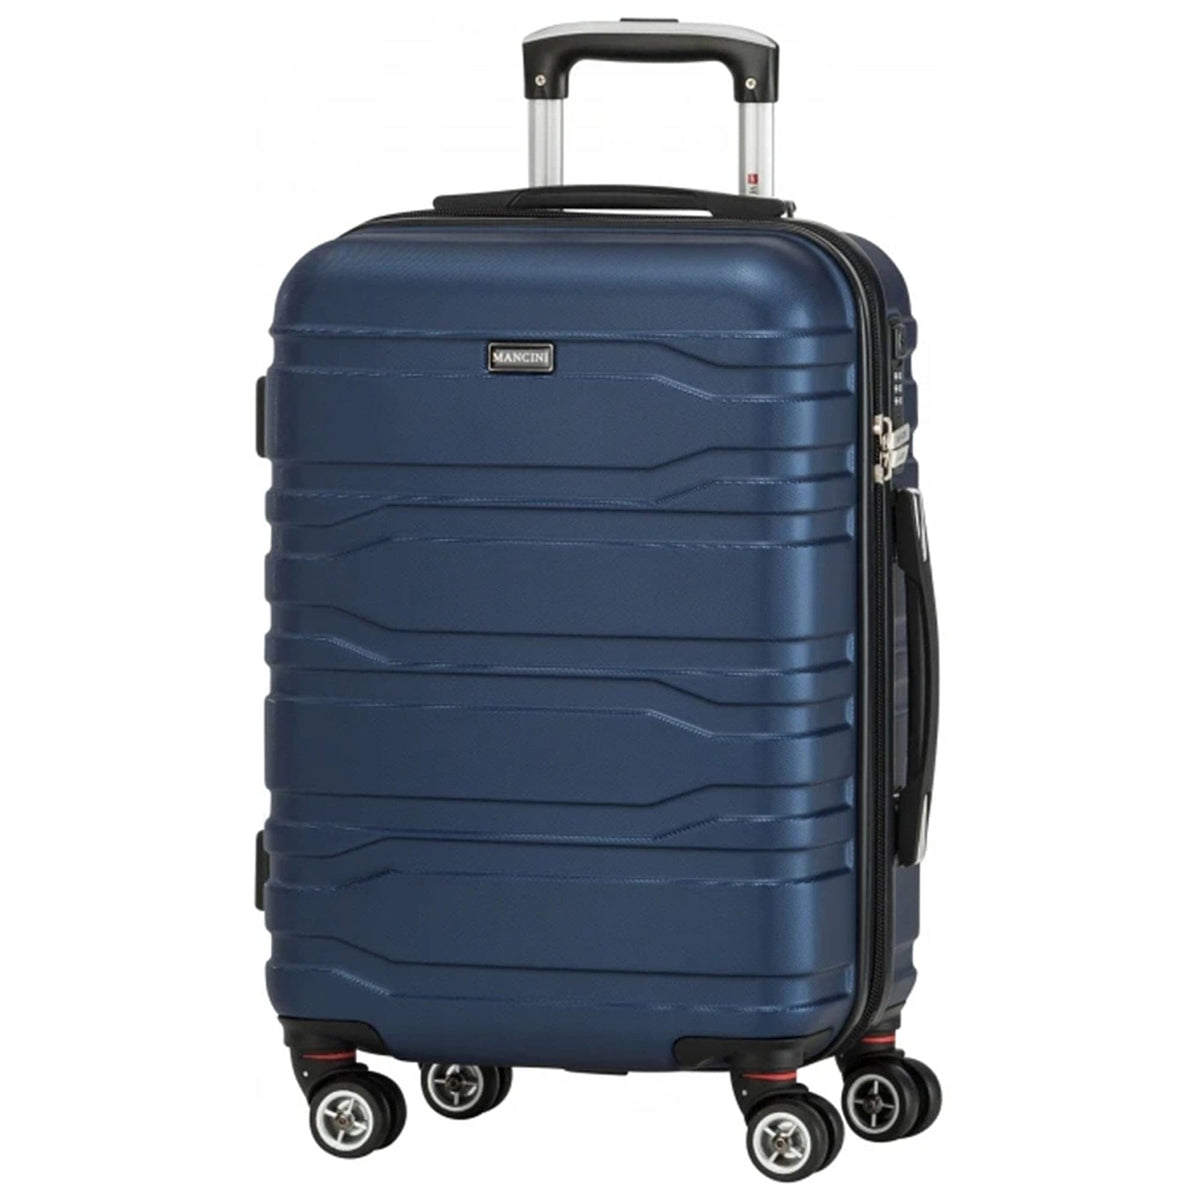 Mancini San Marino 20" Carry-on Lightweight Spinner Luggage